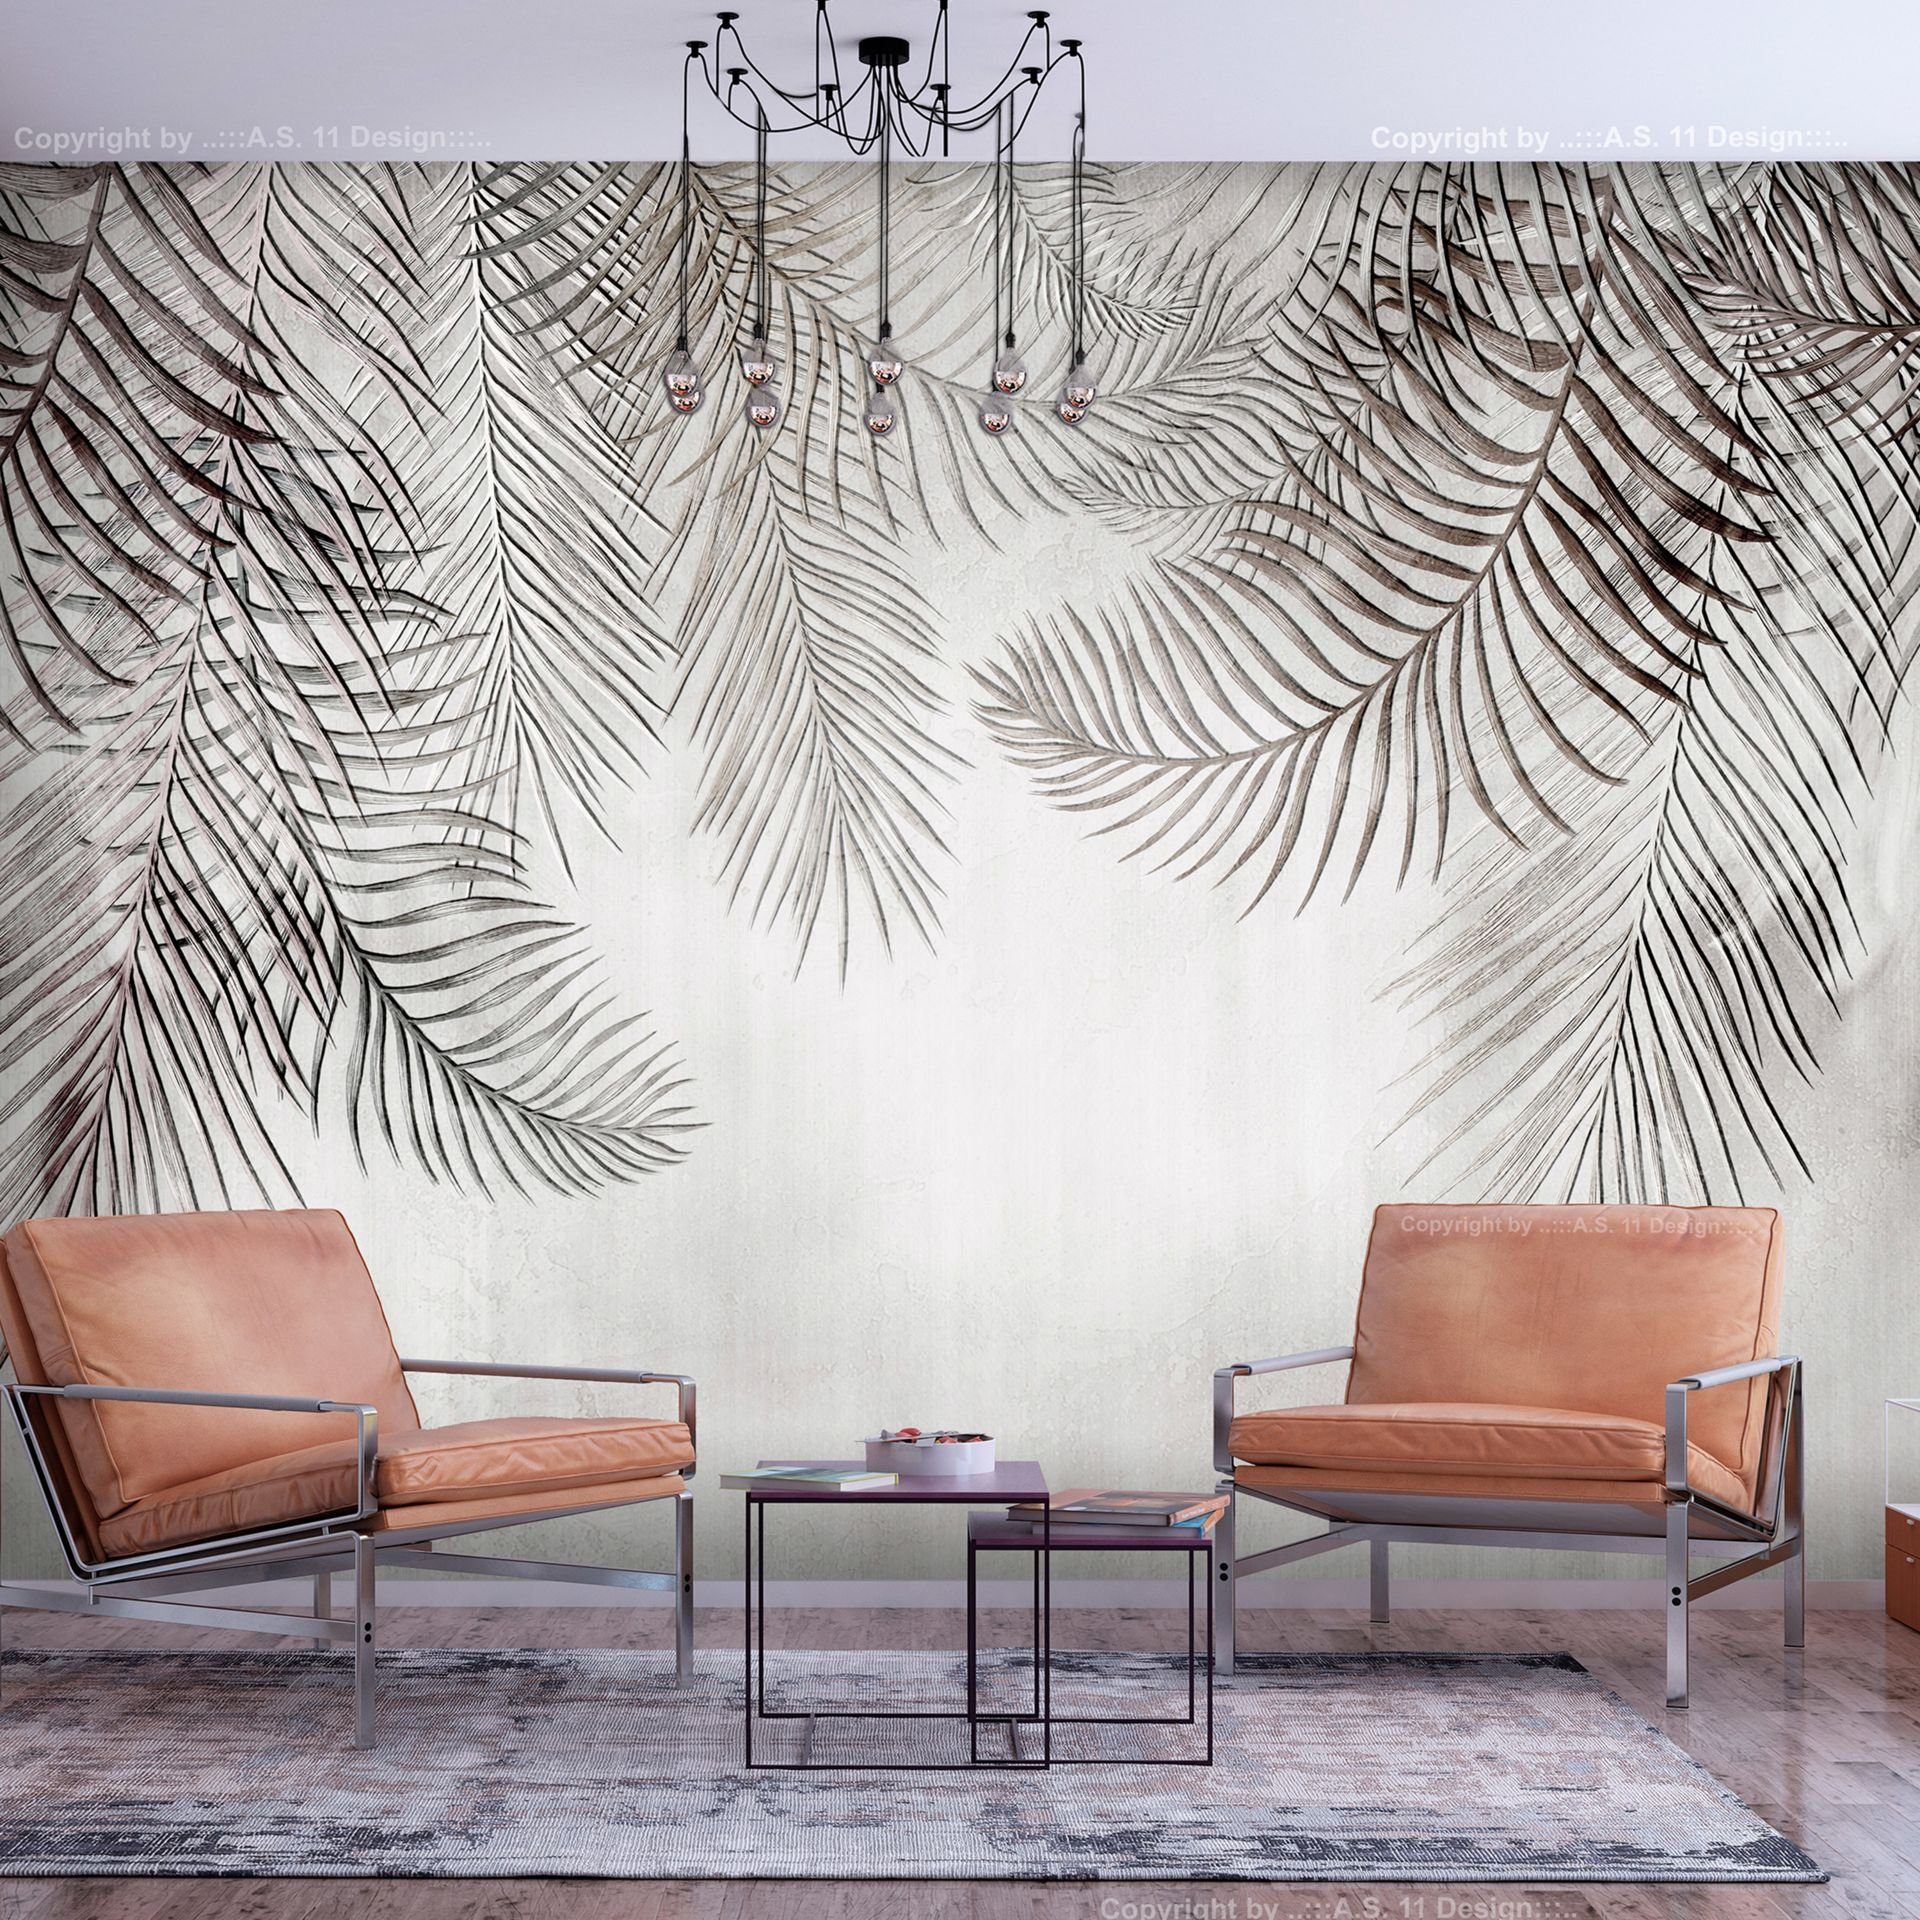 KUNSTLOFT Vliestapete Night Palm Trees 0.98x0.7 m, halb-matt, matt, lichtbeständige Design Tapete | Vliestapeten